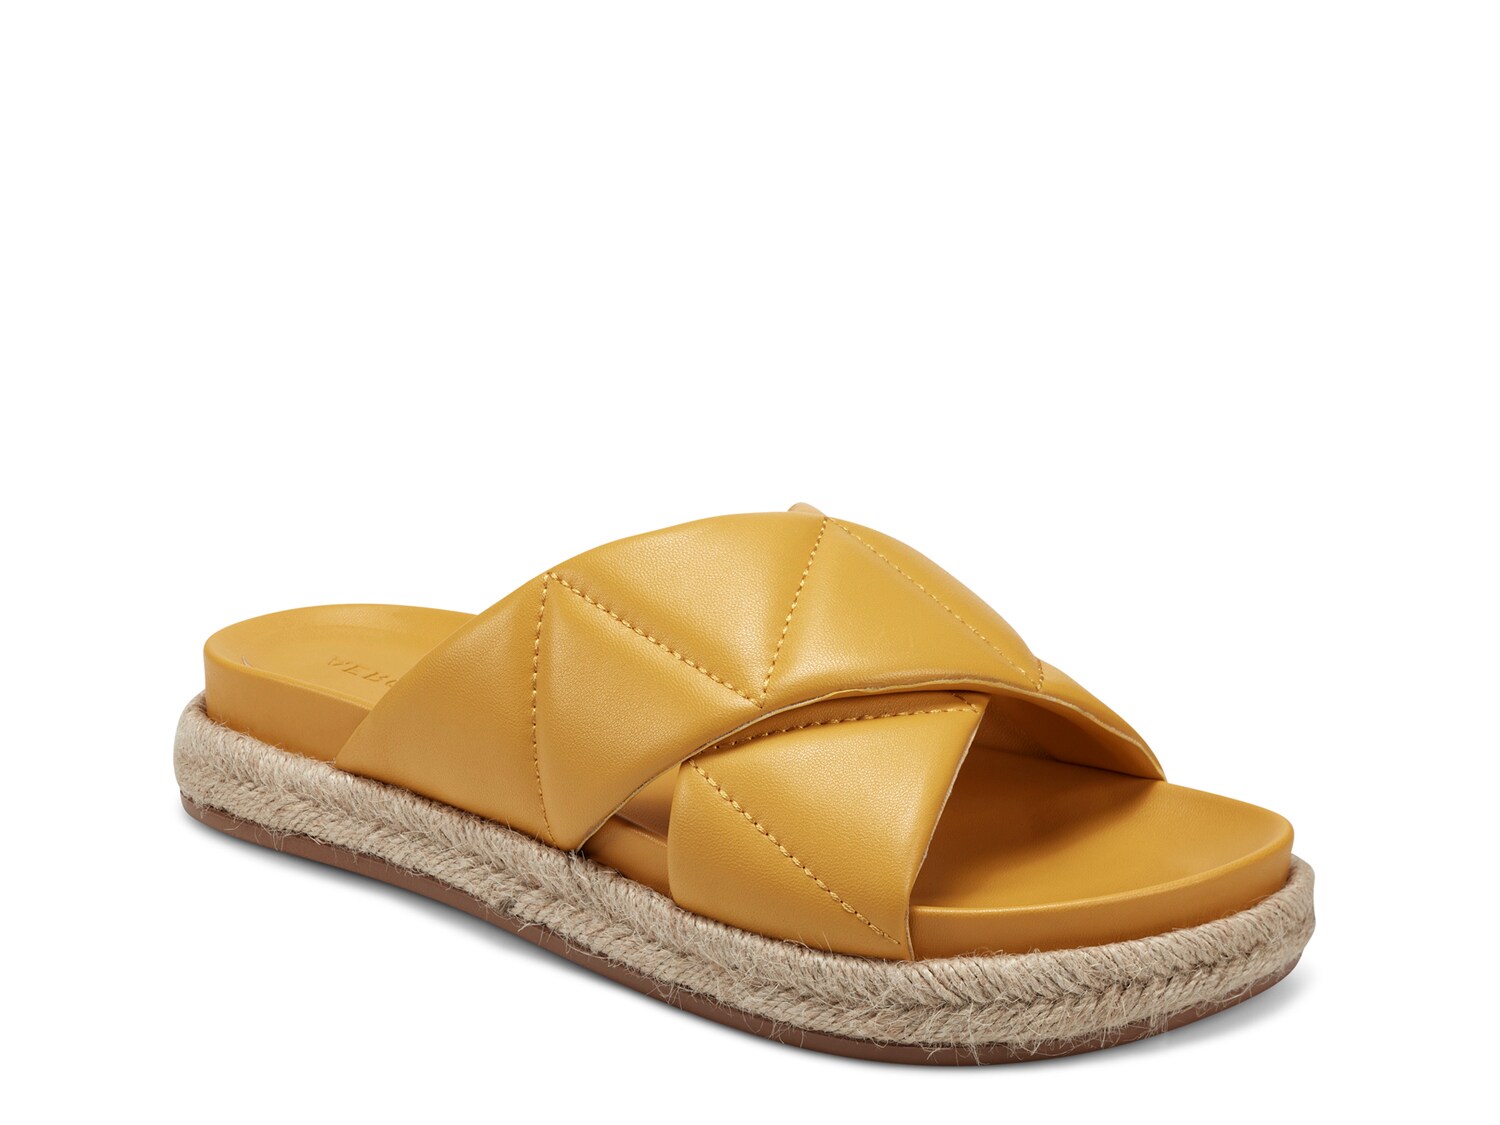 aerosoles yellow sandals